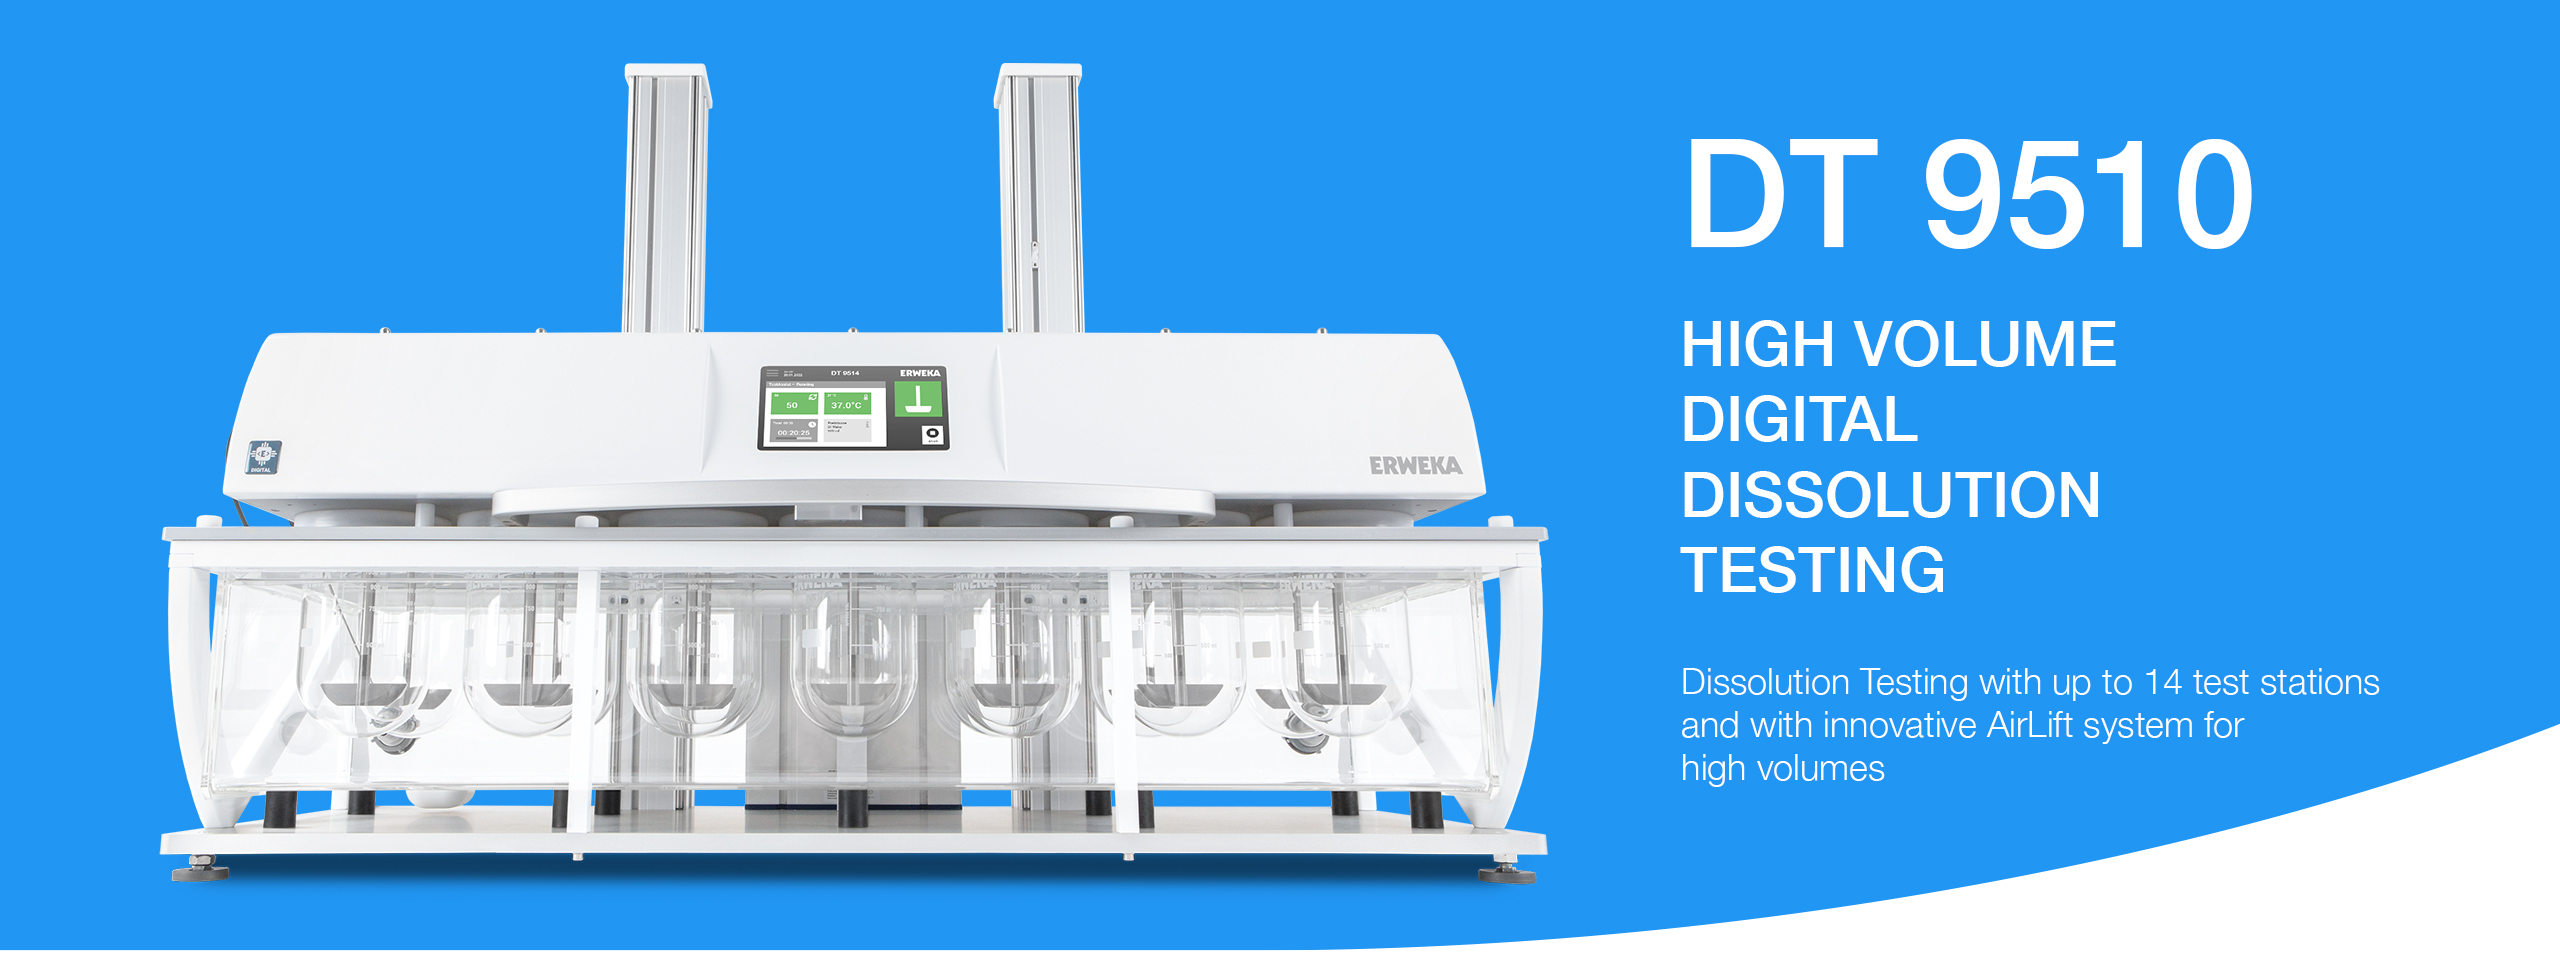 DT 9510 High volume digital dissolution tester